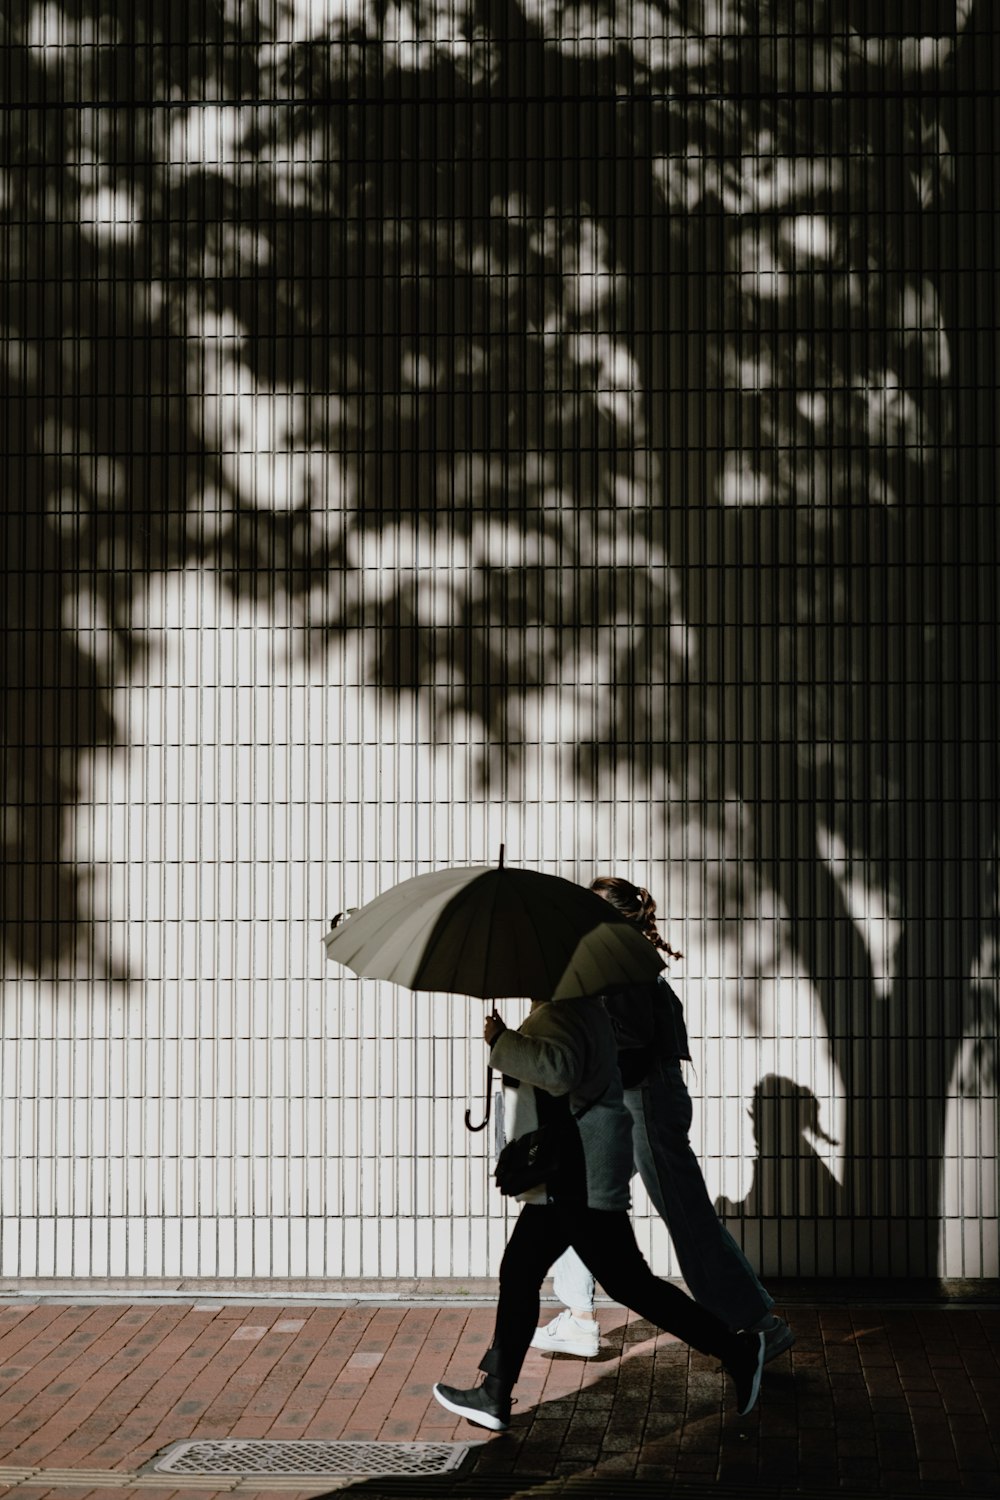 a person walking down a sidewalk with an umbrella